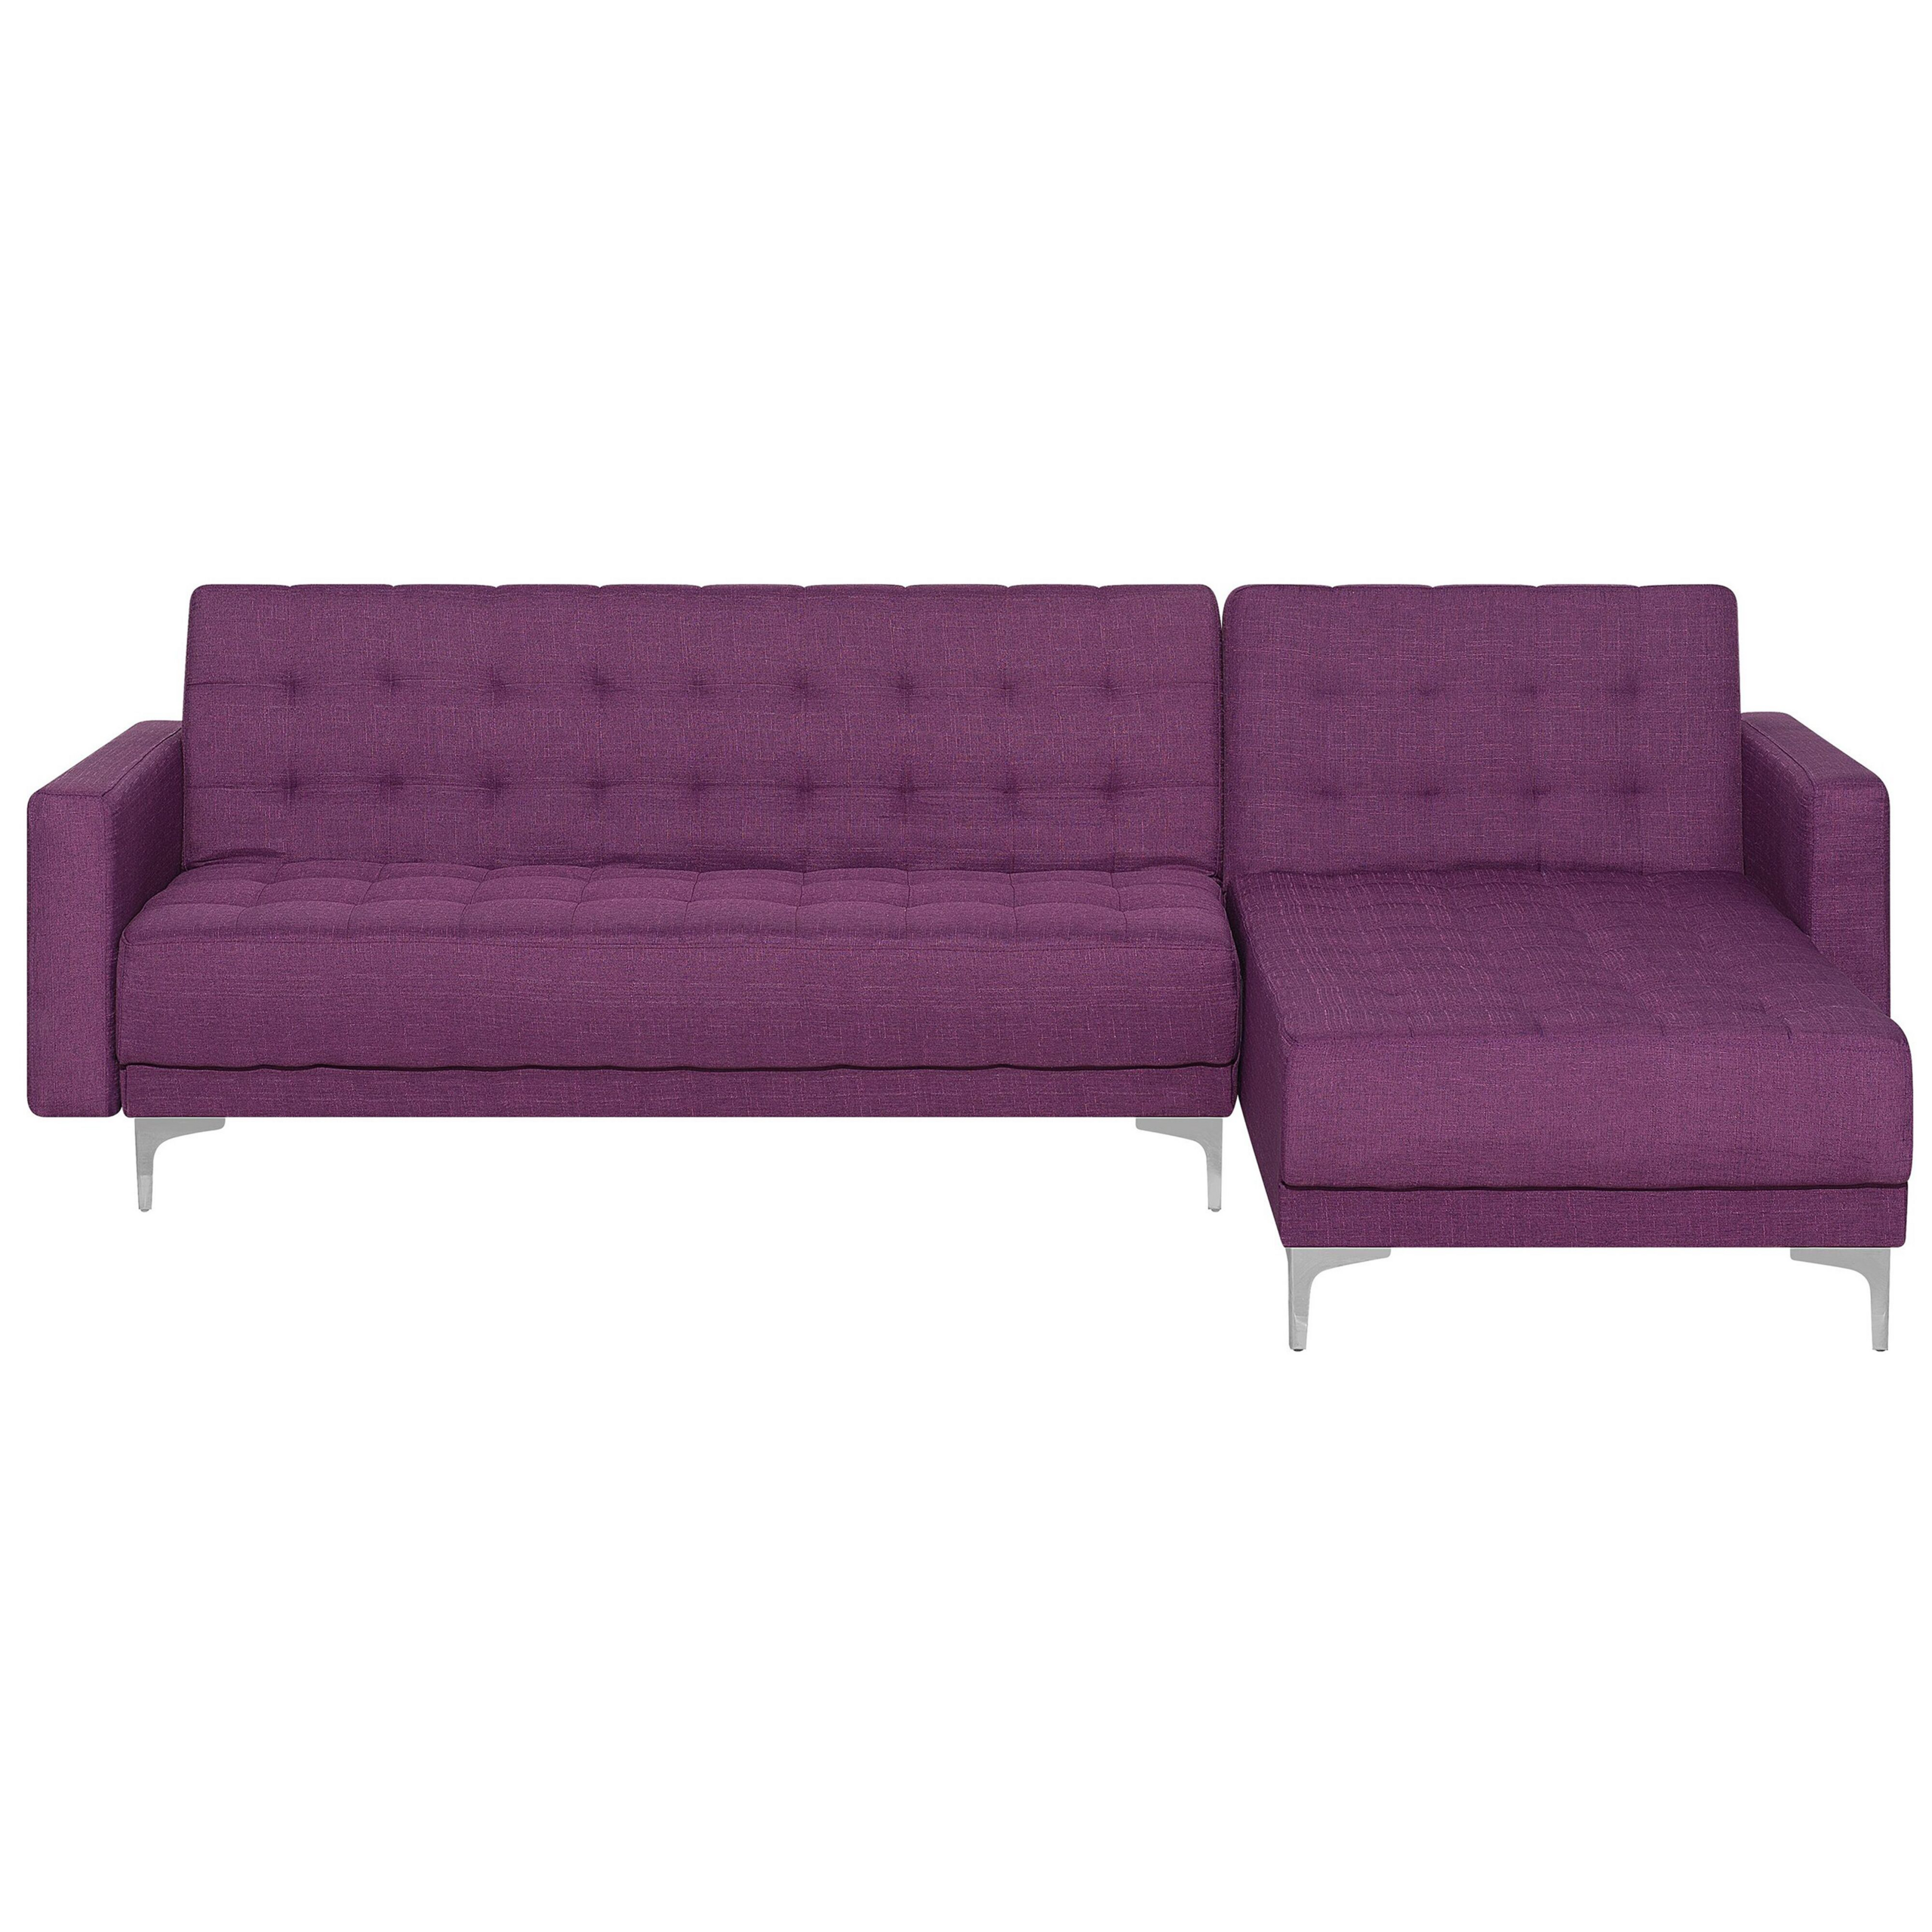 Beliani Corner Sofa Bed Purple Tufted Fabric Modern L-Shaped Modular 4 Seater Left Hand Chaise Longue